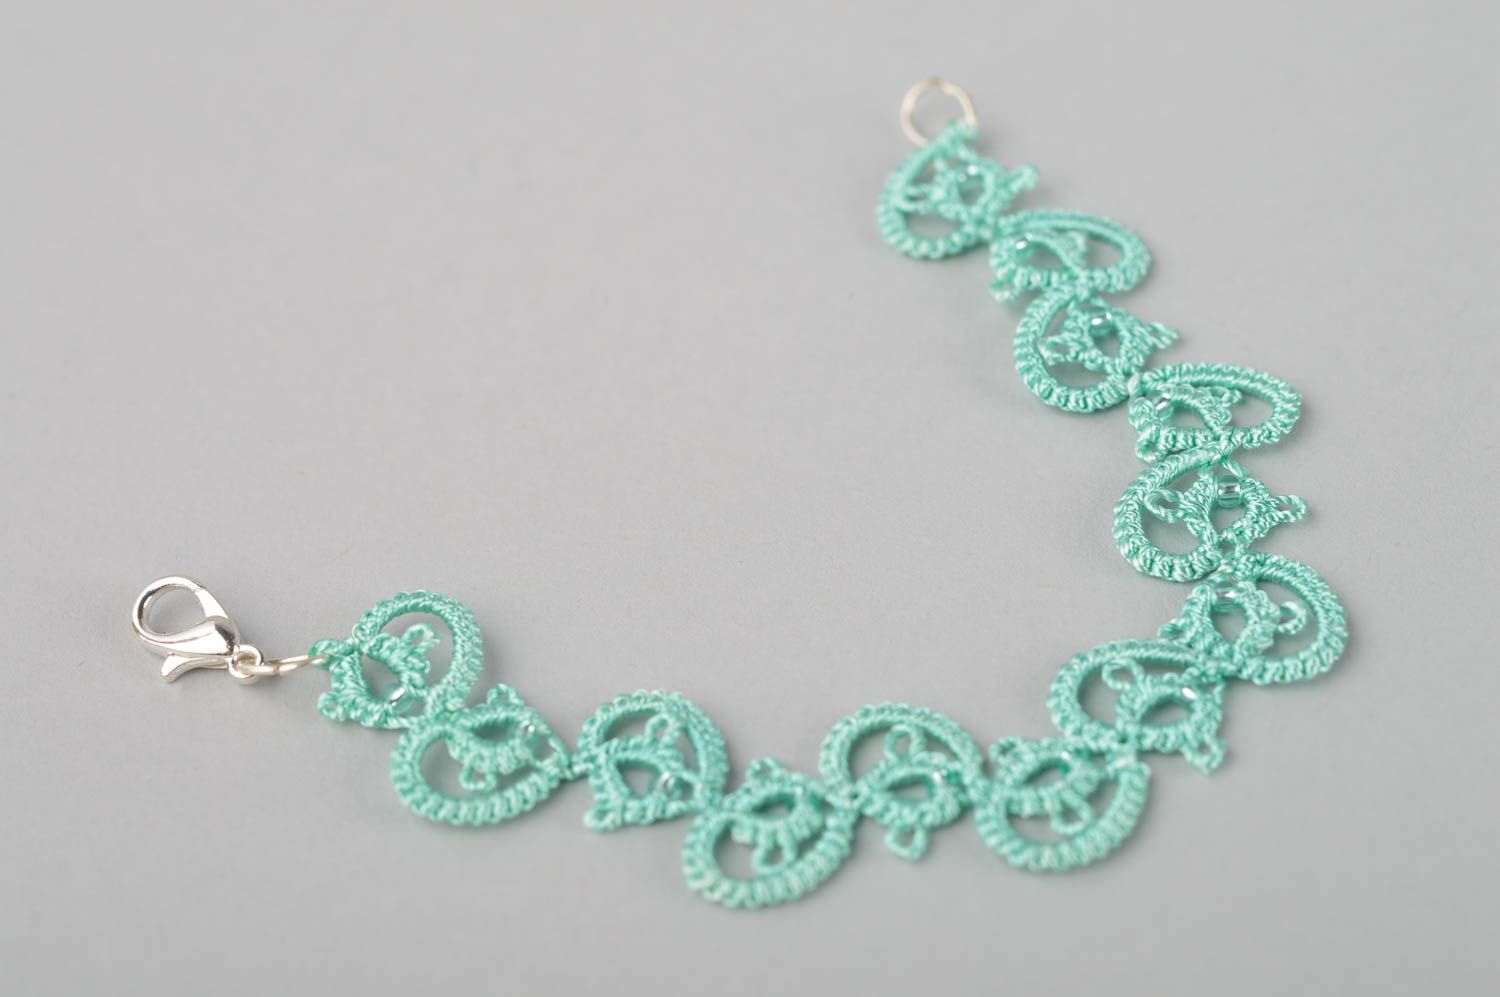 Stylish handmade woven lace bracelet wrist bracelet textile jewelry designs photo 2